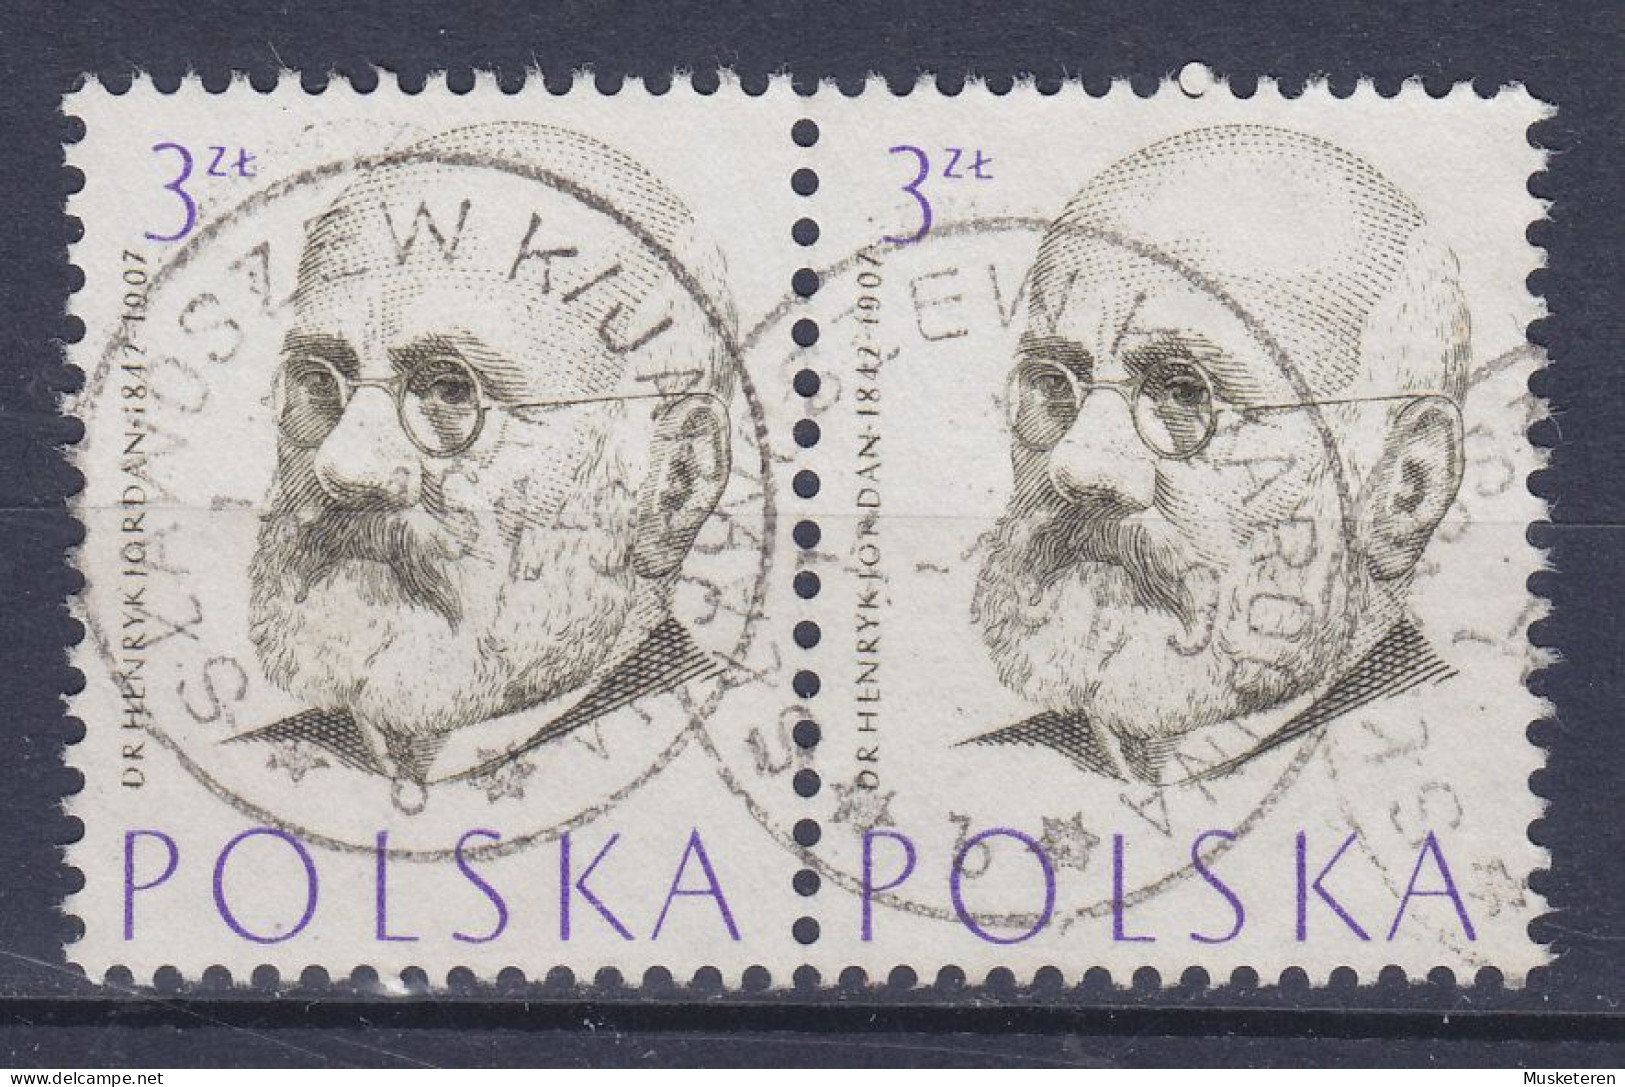 Poland 1957 Mi. 1014, 3 Zl. Henryk Jordan, Gynäkologe Pair Paare Deluxe SLAWOSZEW K/JAROCINA Cancel !! - Used Stamps